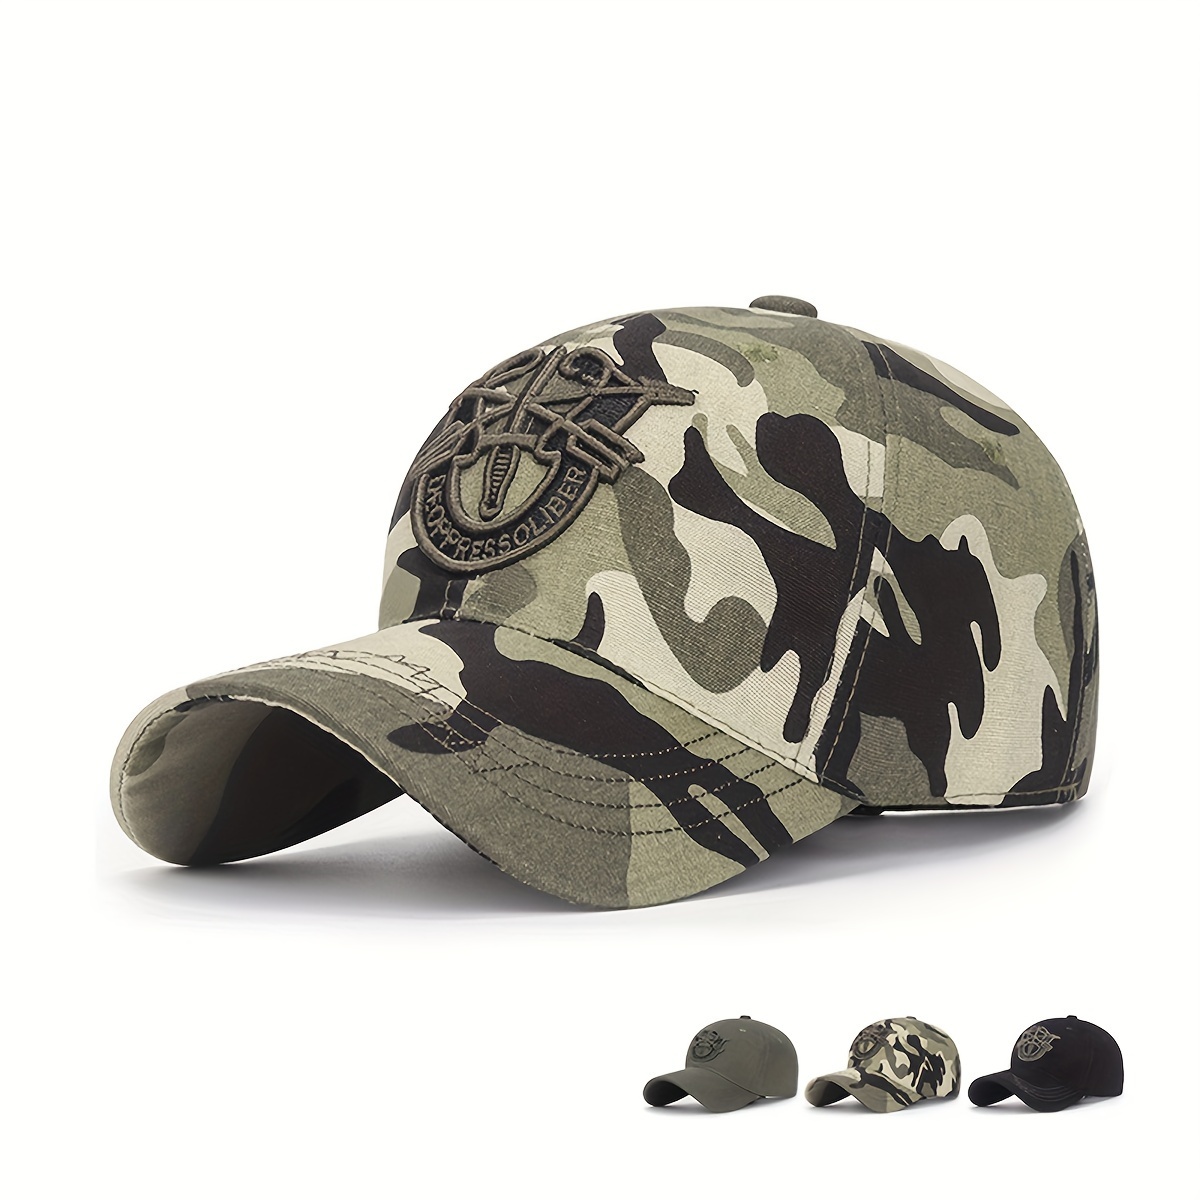 Cheap [NORTHWOOD] Cotton Outdoor Camouflage Flat Top Hats Men Caps